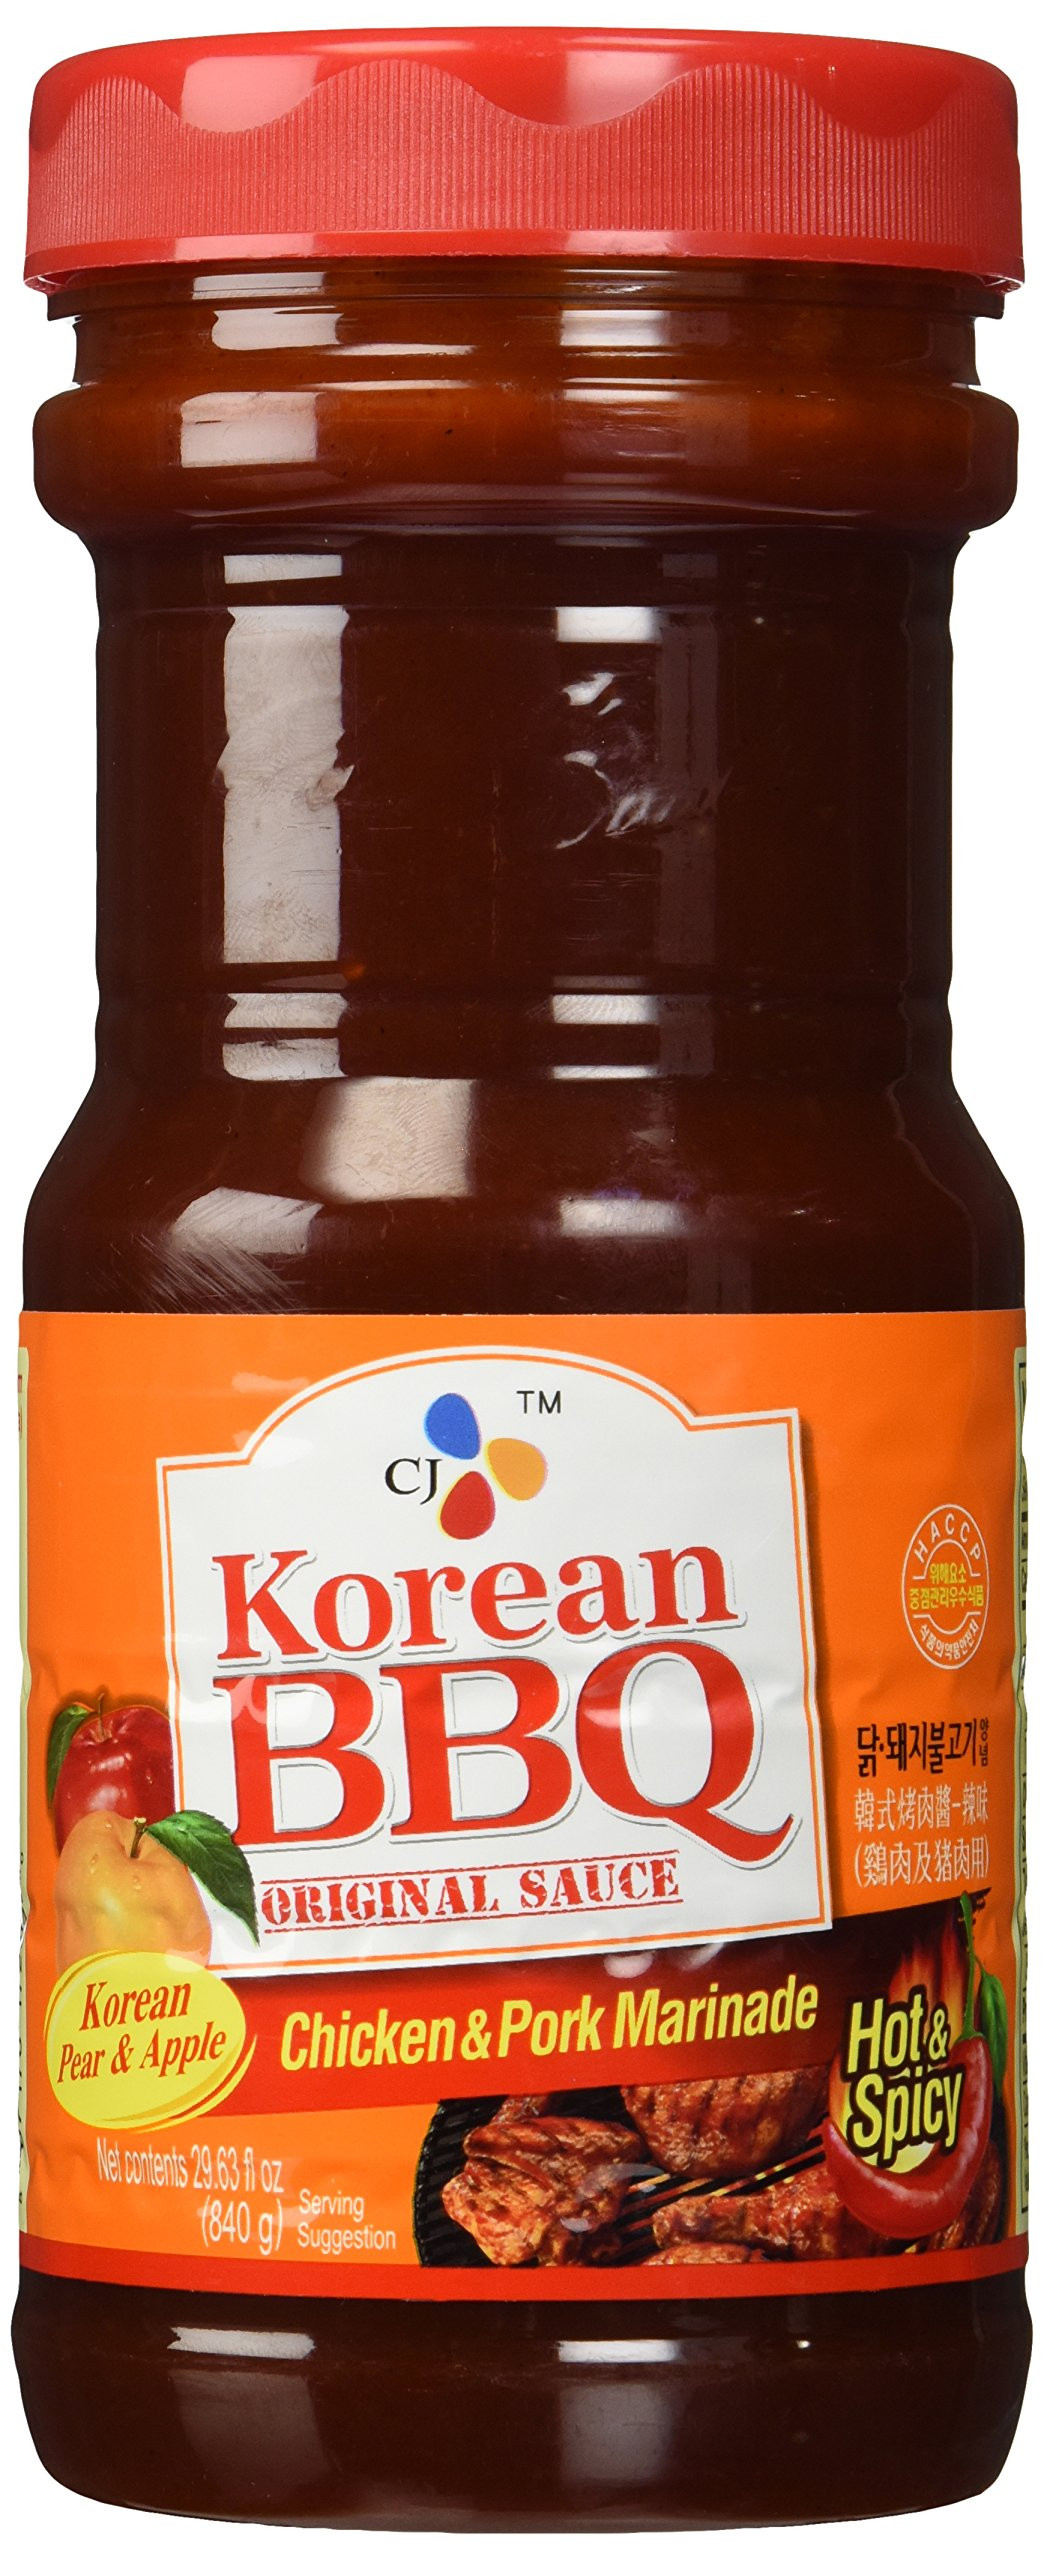 Korean Bbq Sauce
 CJ Korean BBQ Original Sauce Chicken & Pork Marinade 29 63